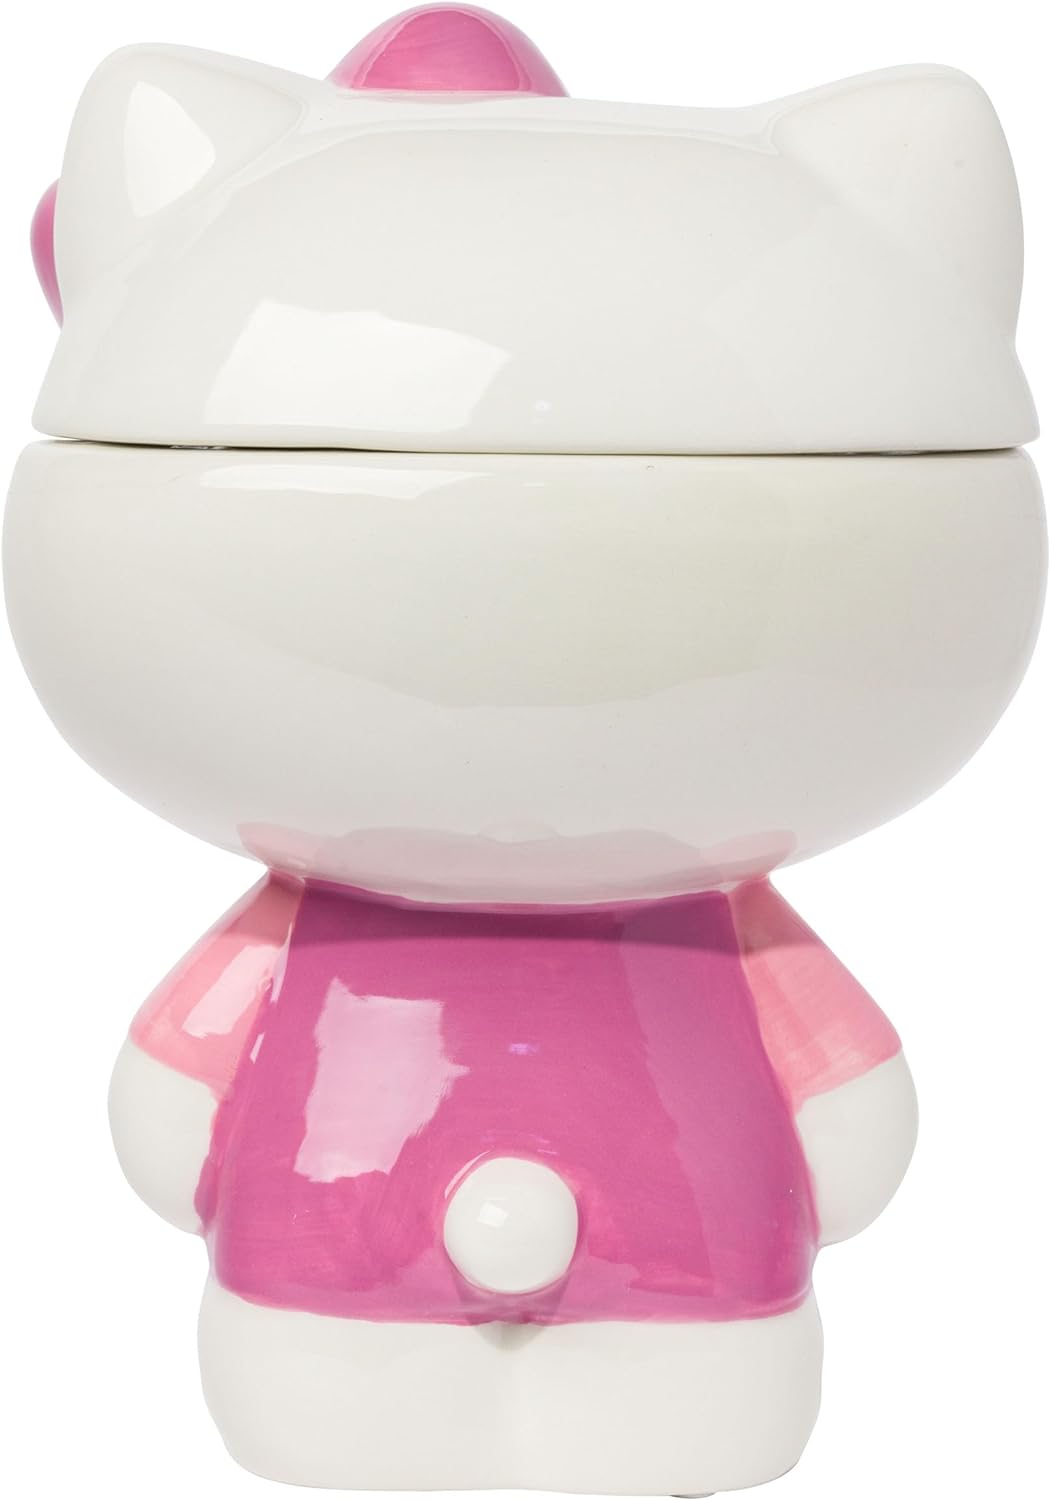 Sanrio Hello Kitty 3D Sculpted Ceramic Cookie Snack Jar